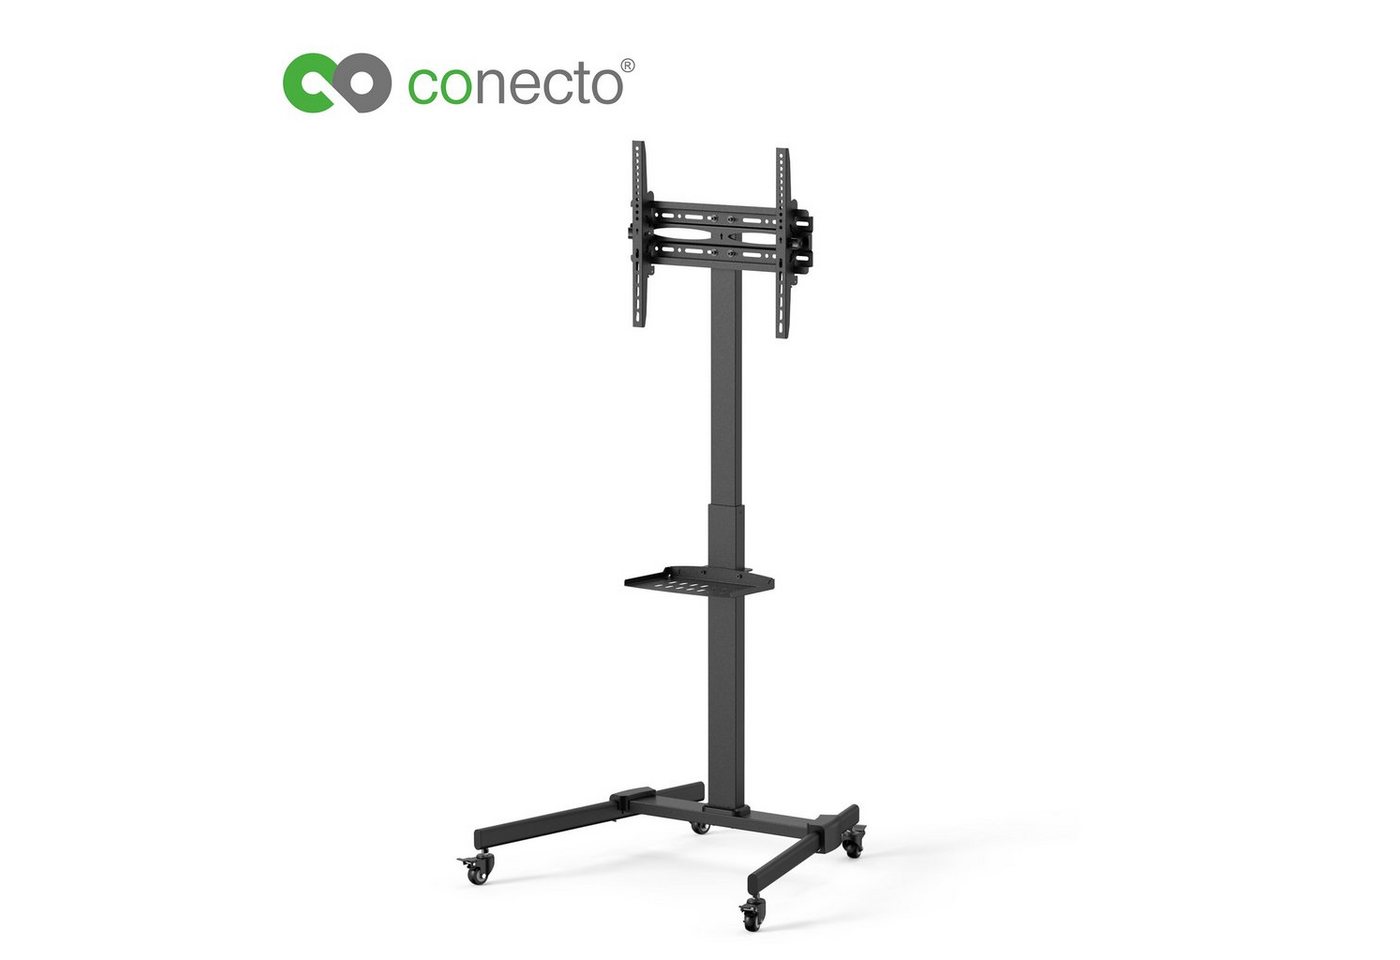 conecto conecto CC50789 TV Standfuß für LCD/LED/Plasma Bildschirme von 81-140 TV-Ständer von conecto